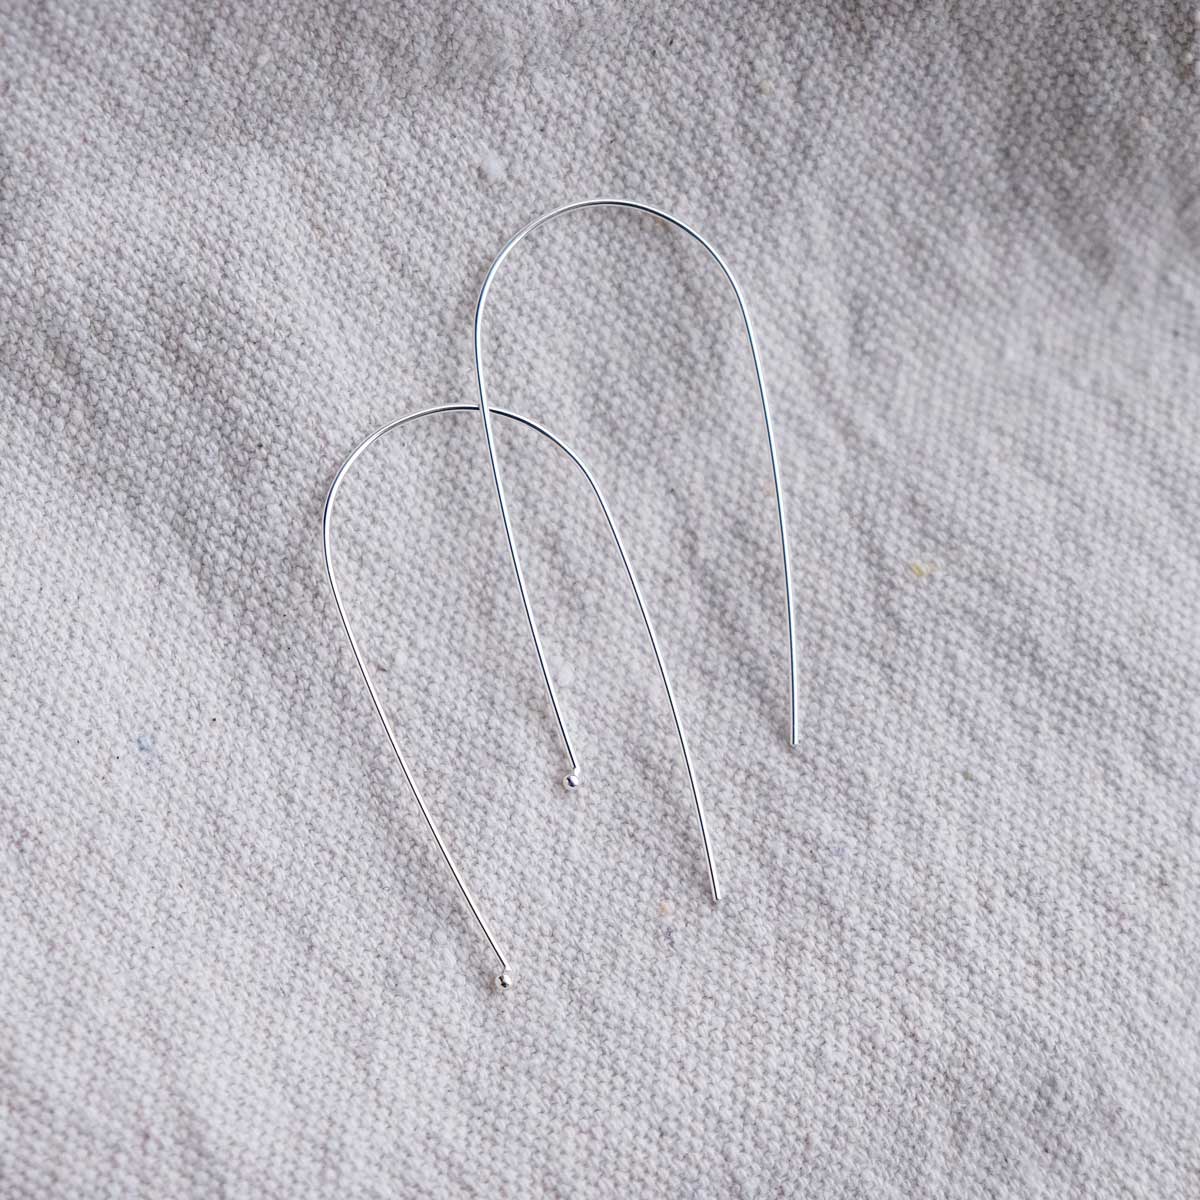 Large Arc Hook Earrings - Glass Sky Jewelry - Geometric Minimal Sterling Silver Jewelry - Handmade in Columbus, Ohio by artist Andrea Kaiser